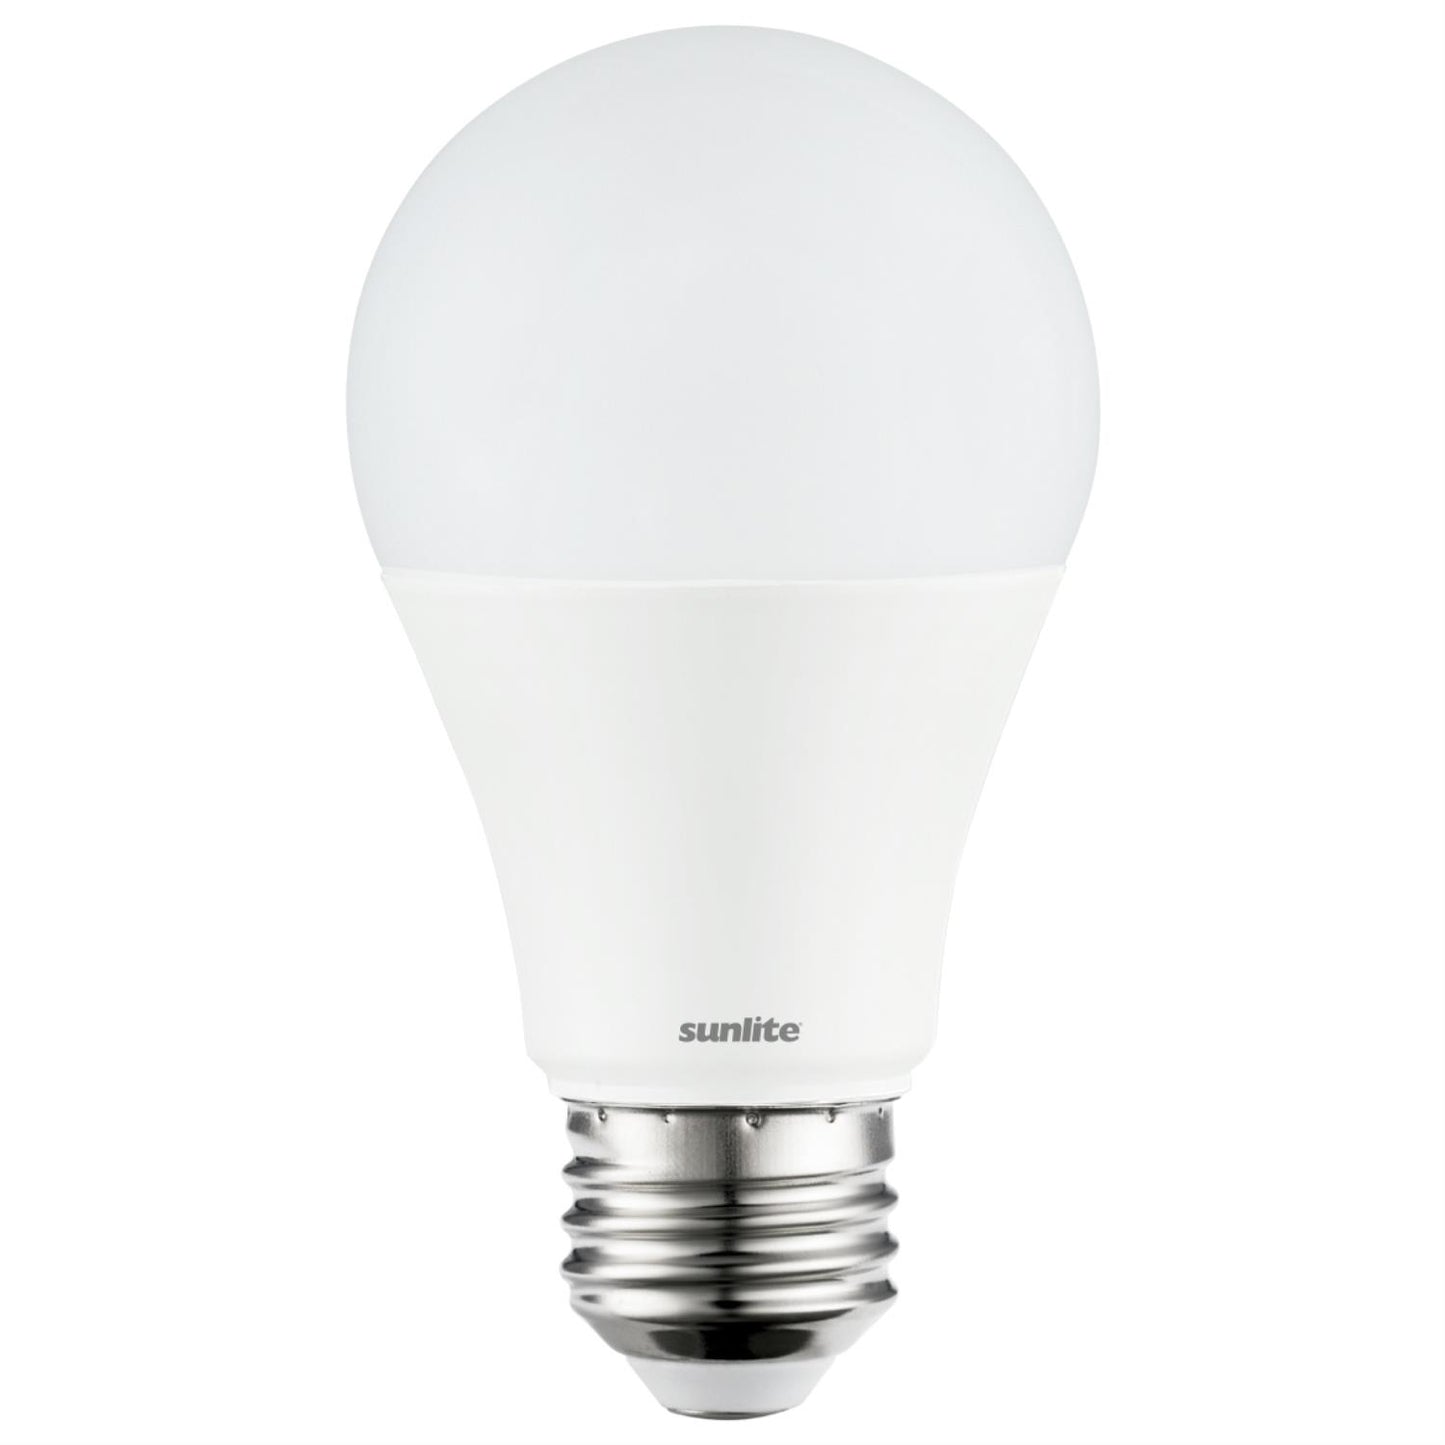 3 Pack Sunlite A19 LED Bulbs, 9 Watt (60 Watt Equivalent), 800 Lumens, Medium (E26) Base, 3000K Warm White, UL Listed